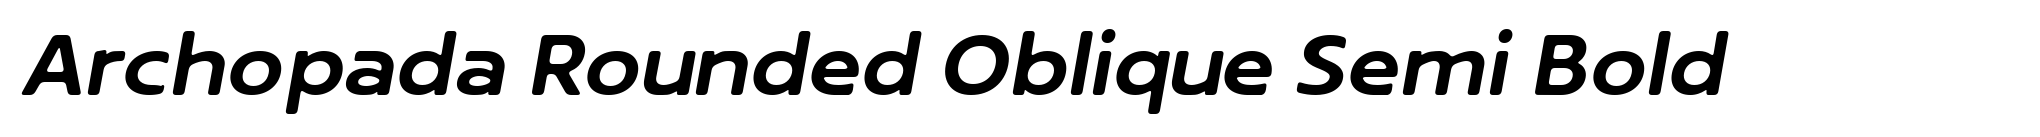 Archopada Rounded Oblique Semi Bold image